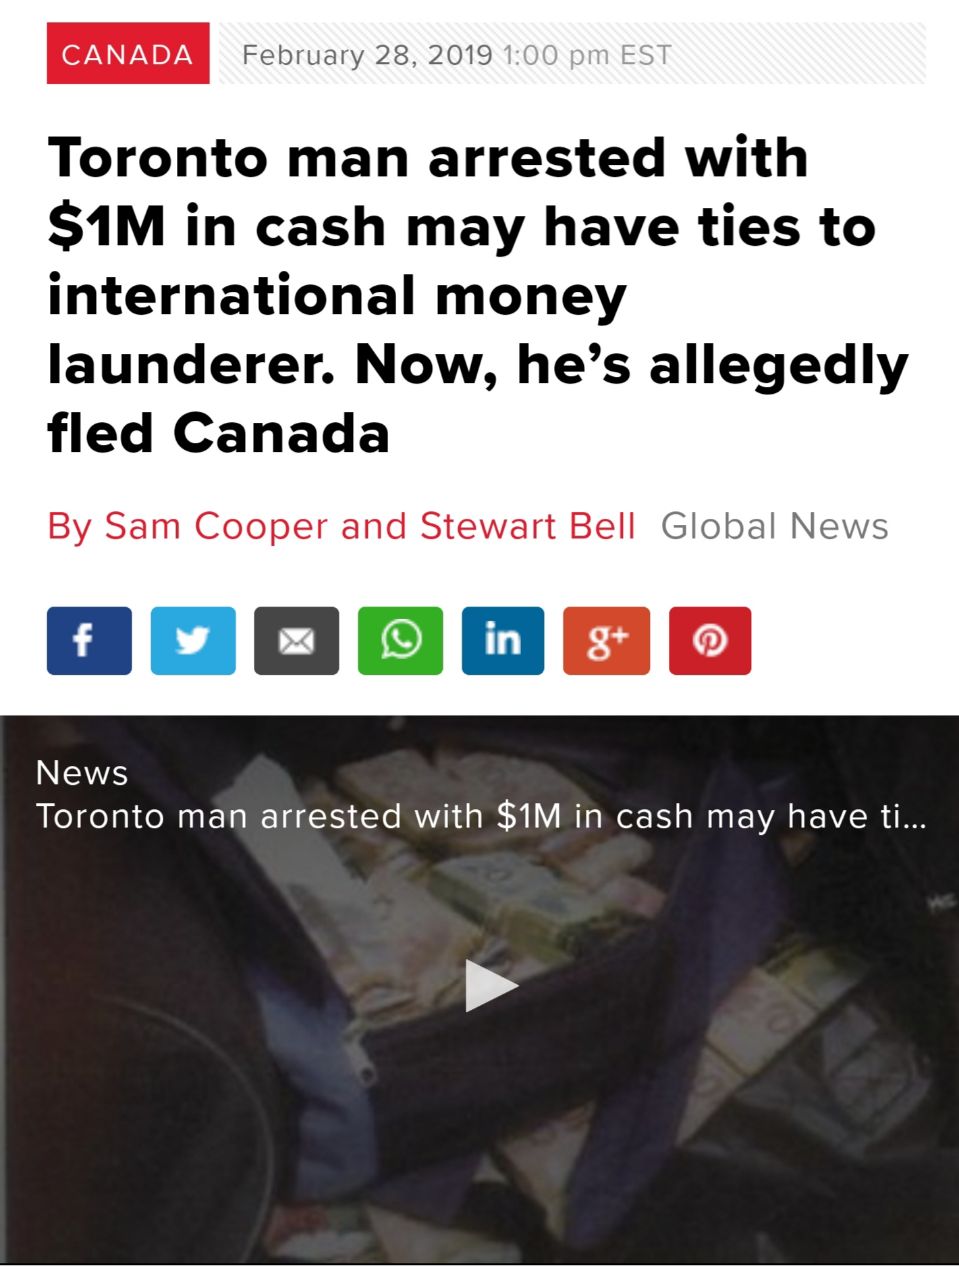 ♦️مهدیزاده صراف ایرانی مقیم تورنتو که حین حمل بیش از ۱‌میلیون دلار کانادا در مسیر مونترال به تورونتو بازداشت  و به قید وثیقه آزاد شده بود از کانادا فرار کرد.